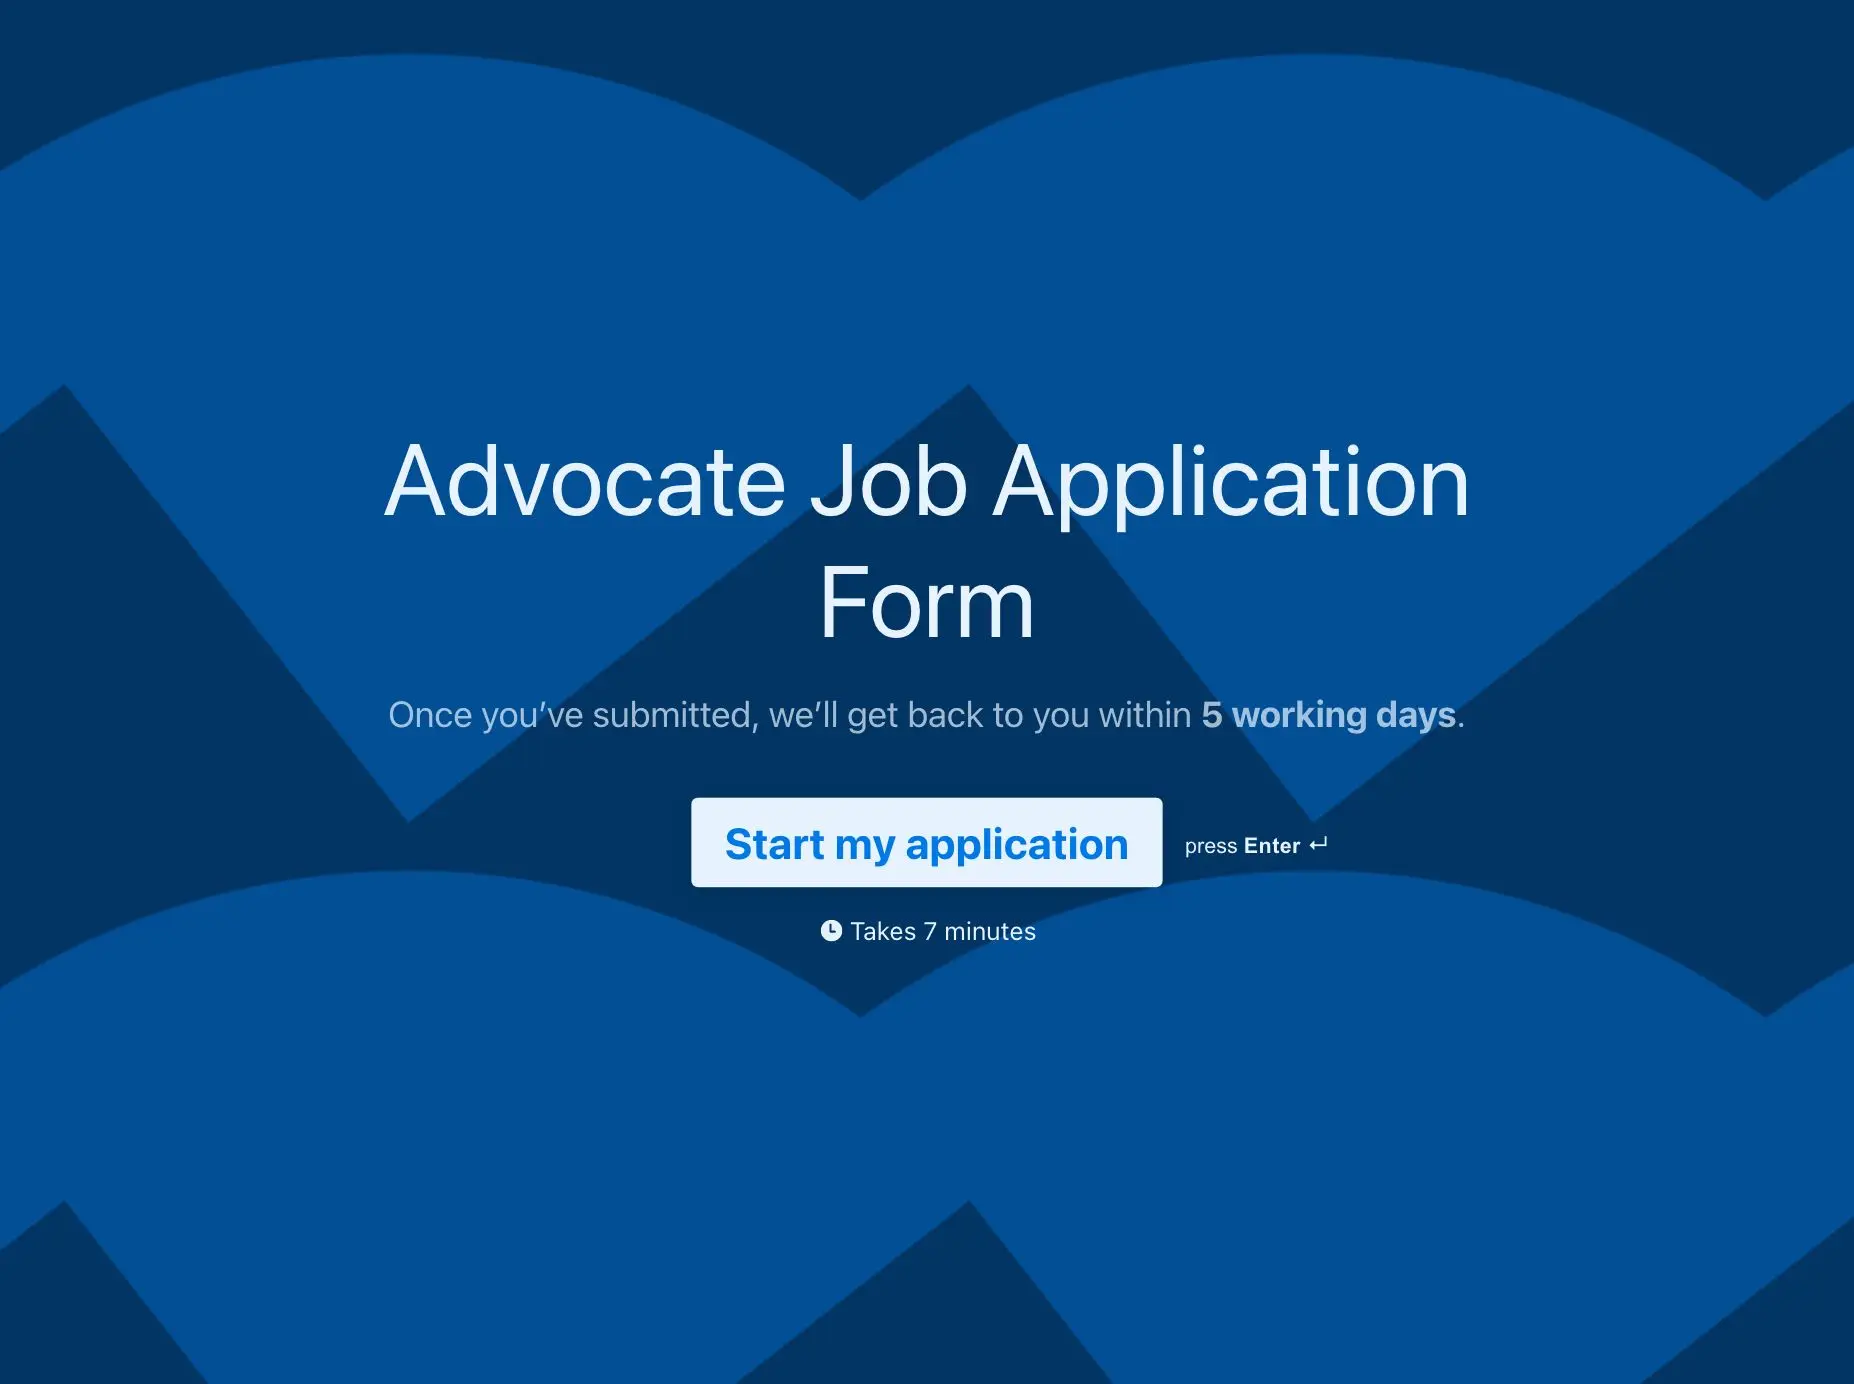 Advocate Job Application Form Template Hero